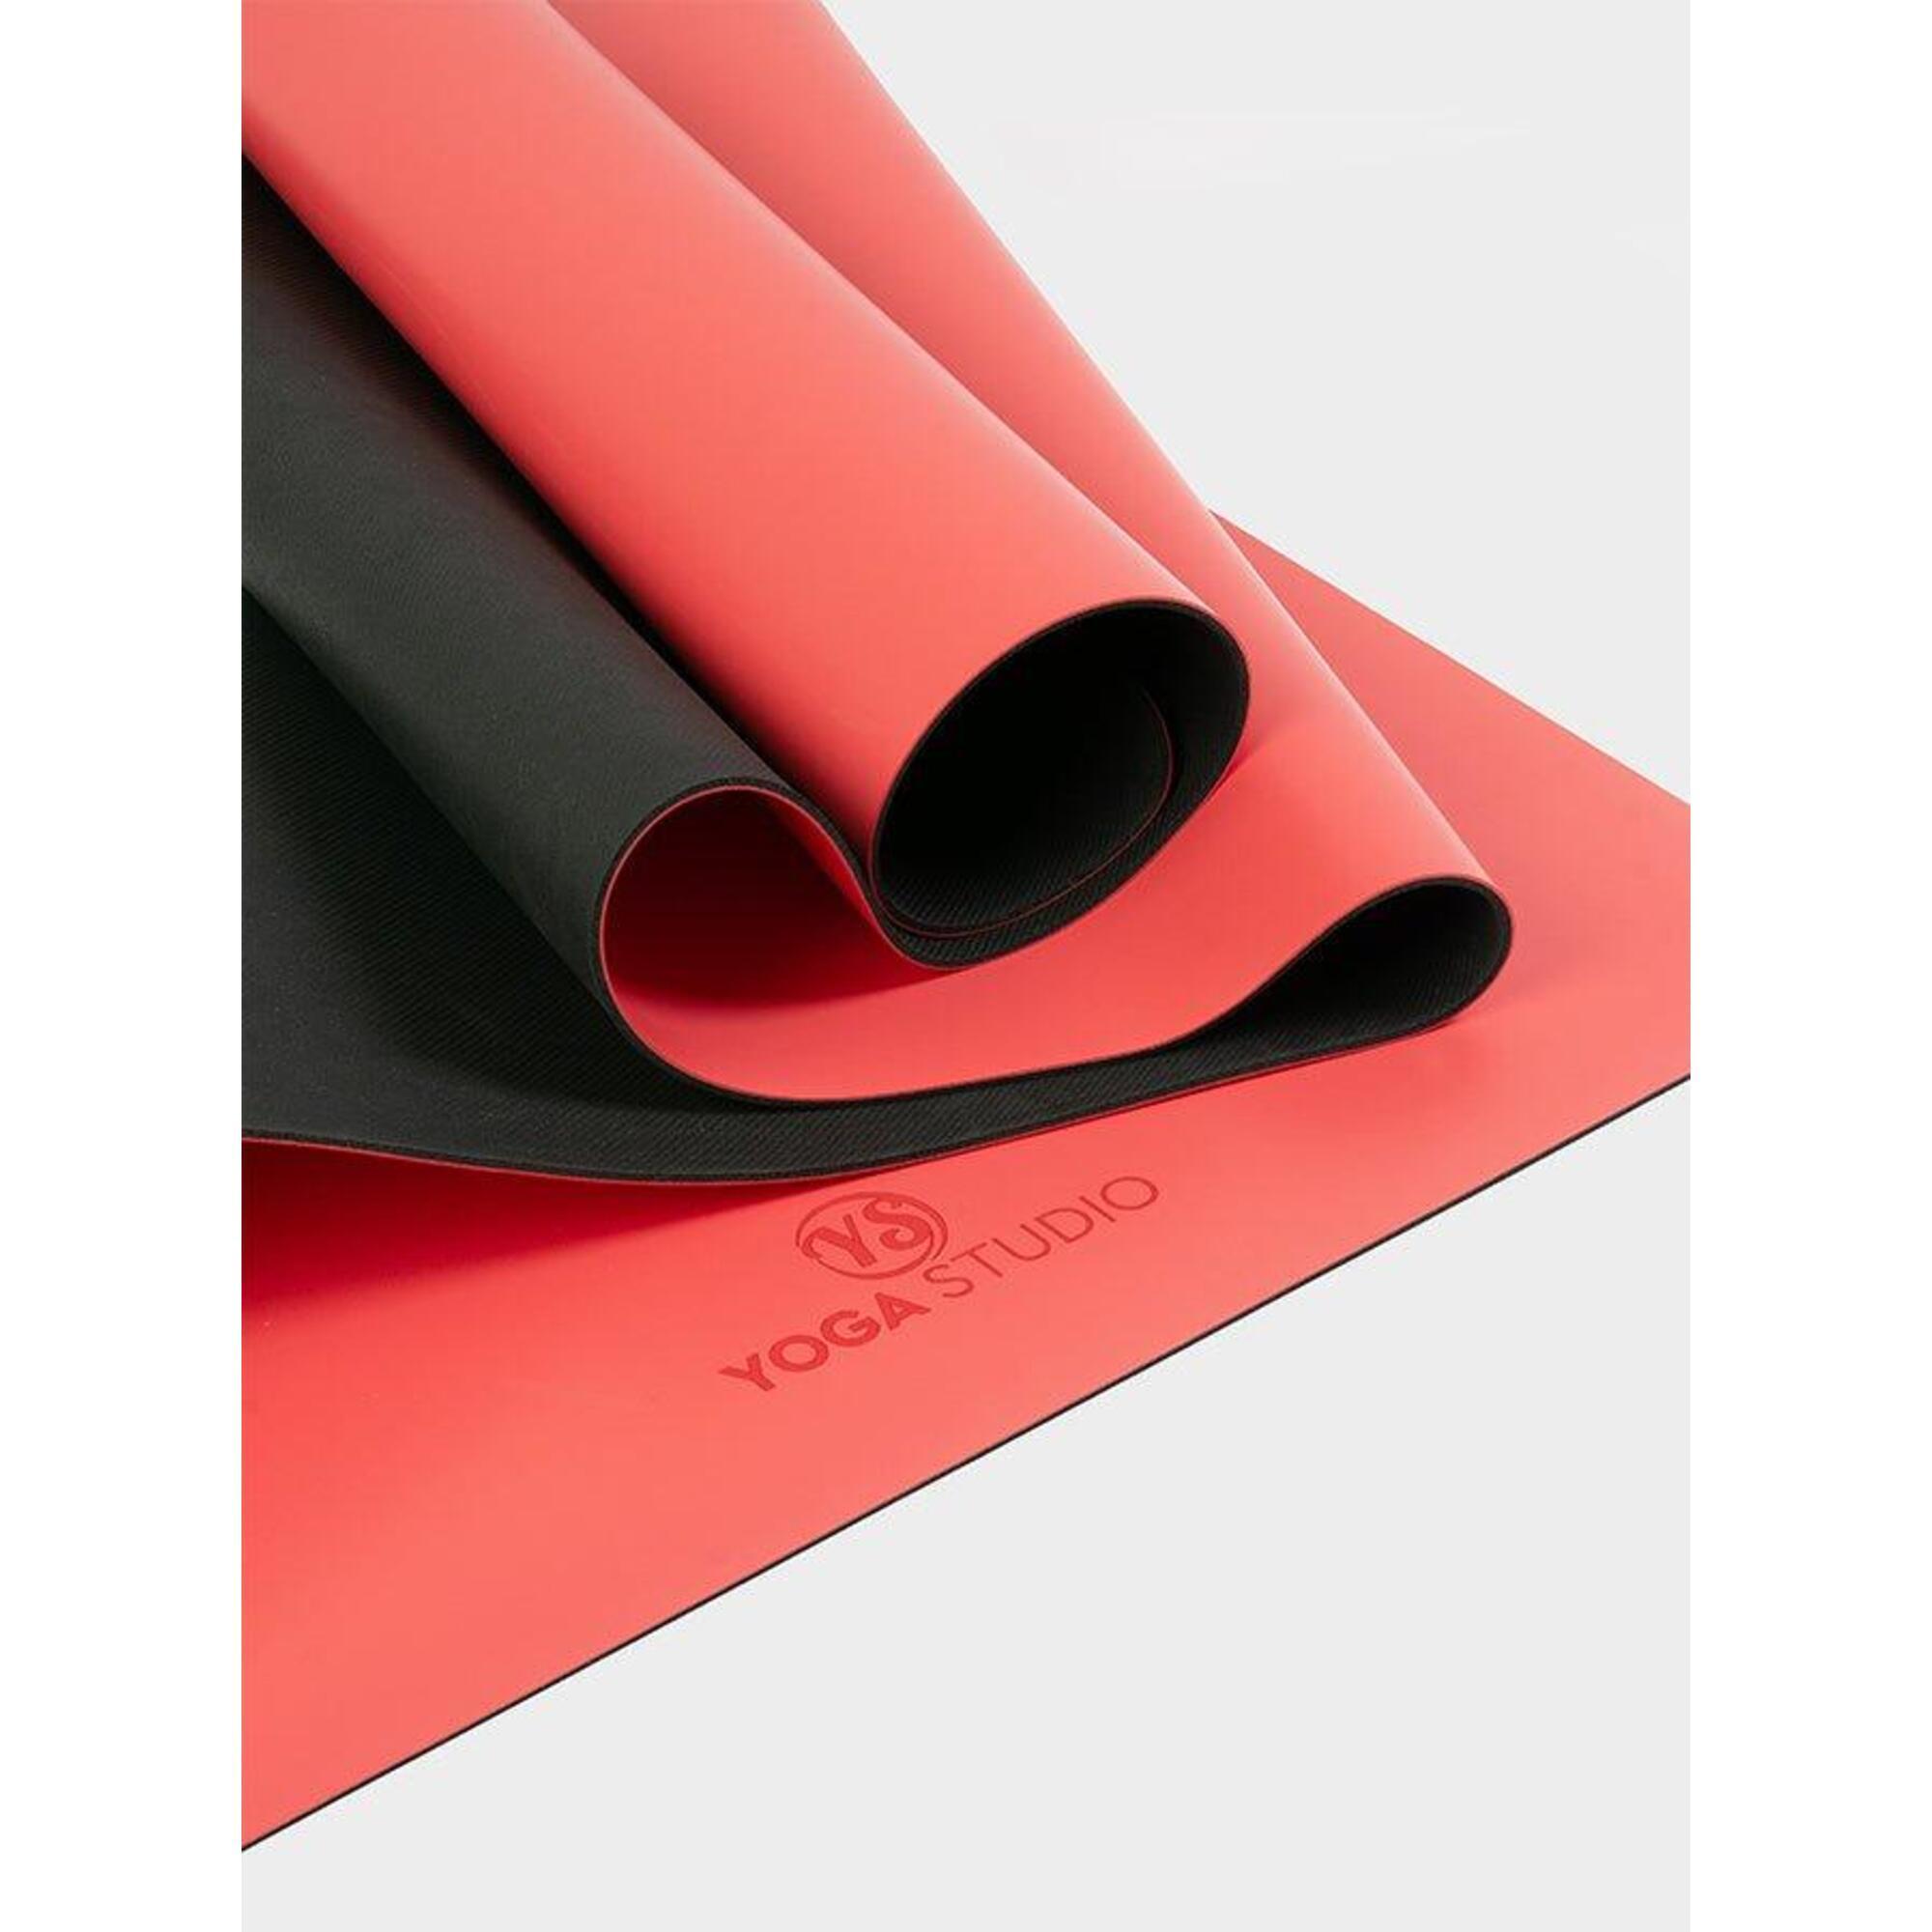 YOGA STUDIO Yoga Studio The Grip Yoga Mat 4mm - Red